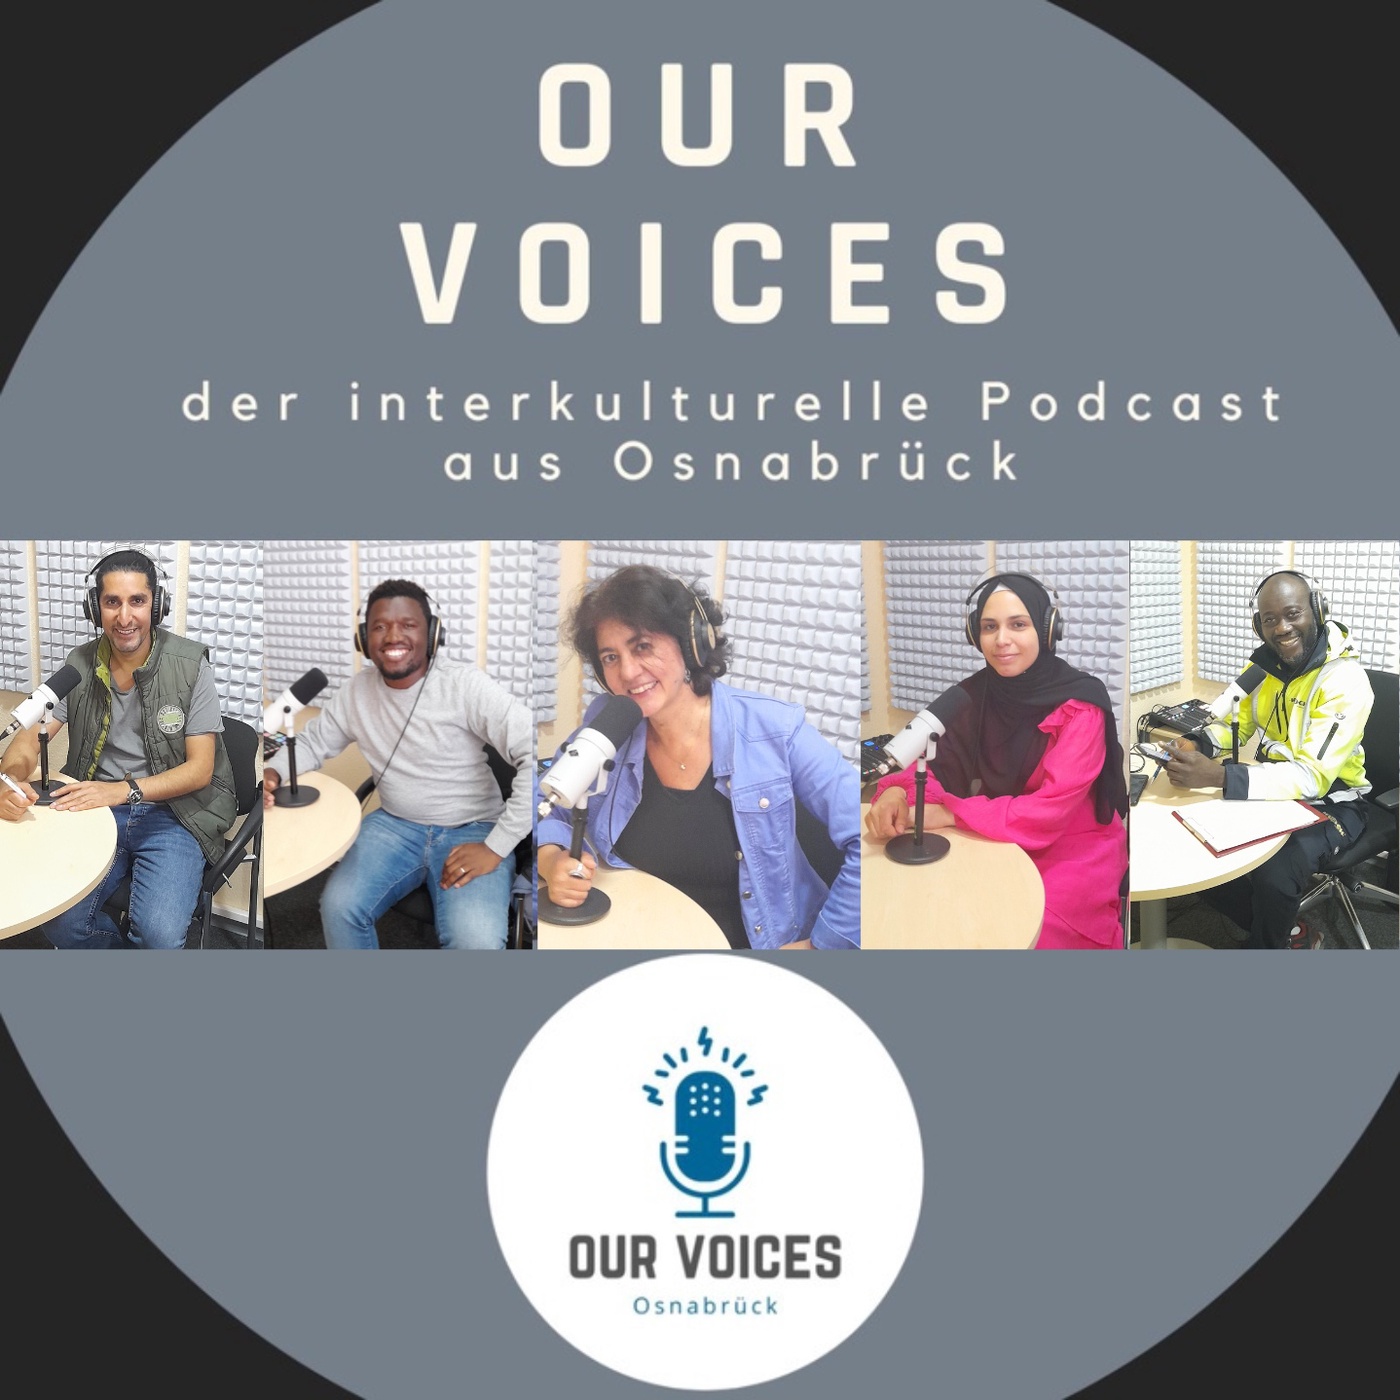 Our Voices – Der interkulturelle Podcast aus Osnabrück